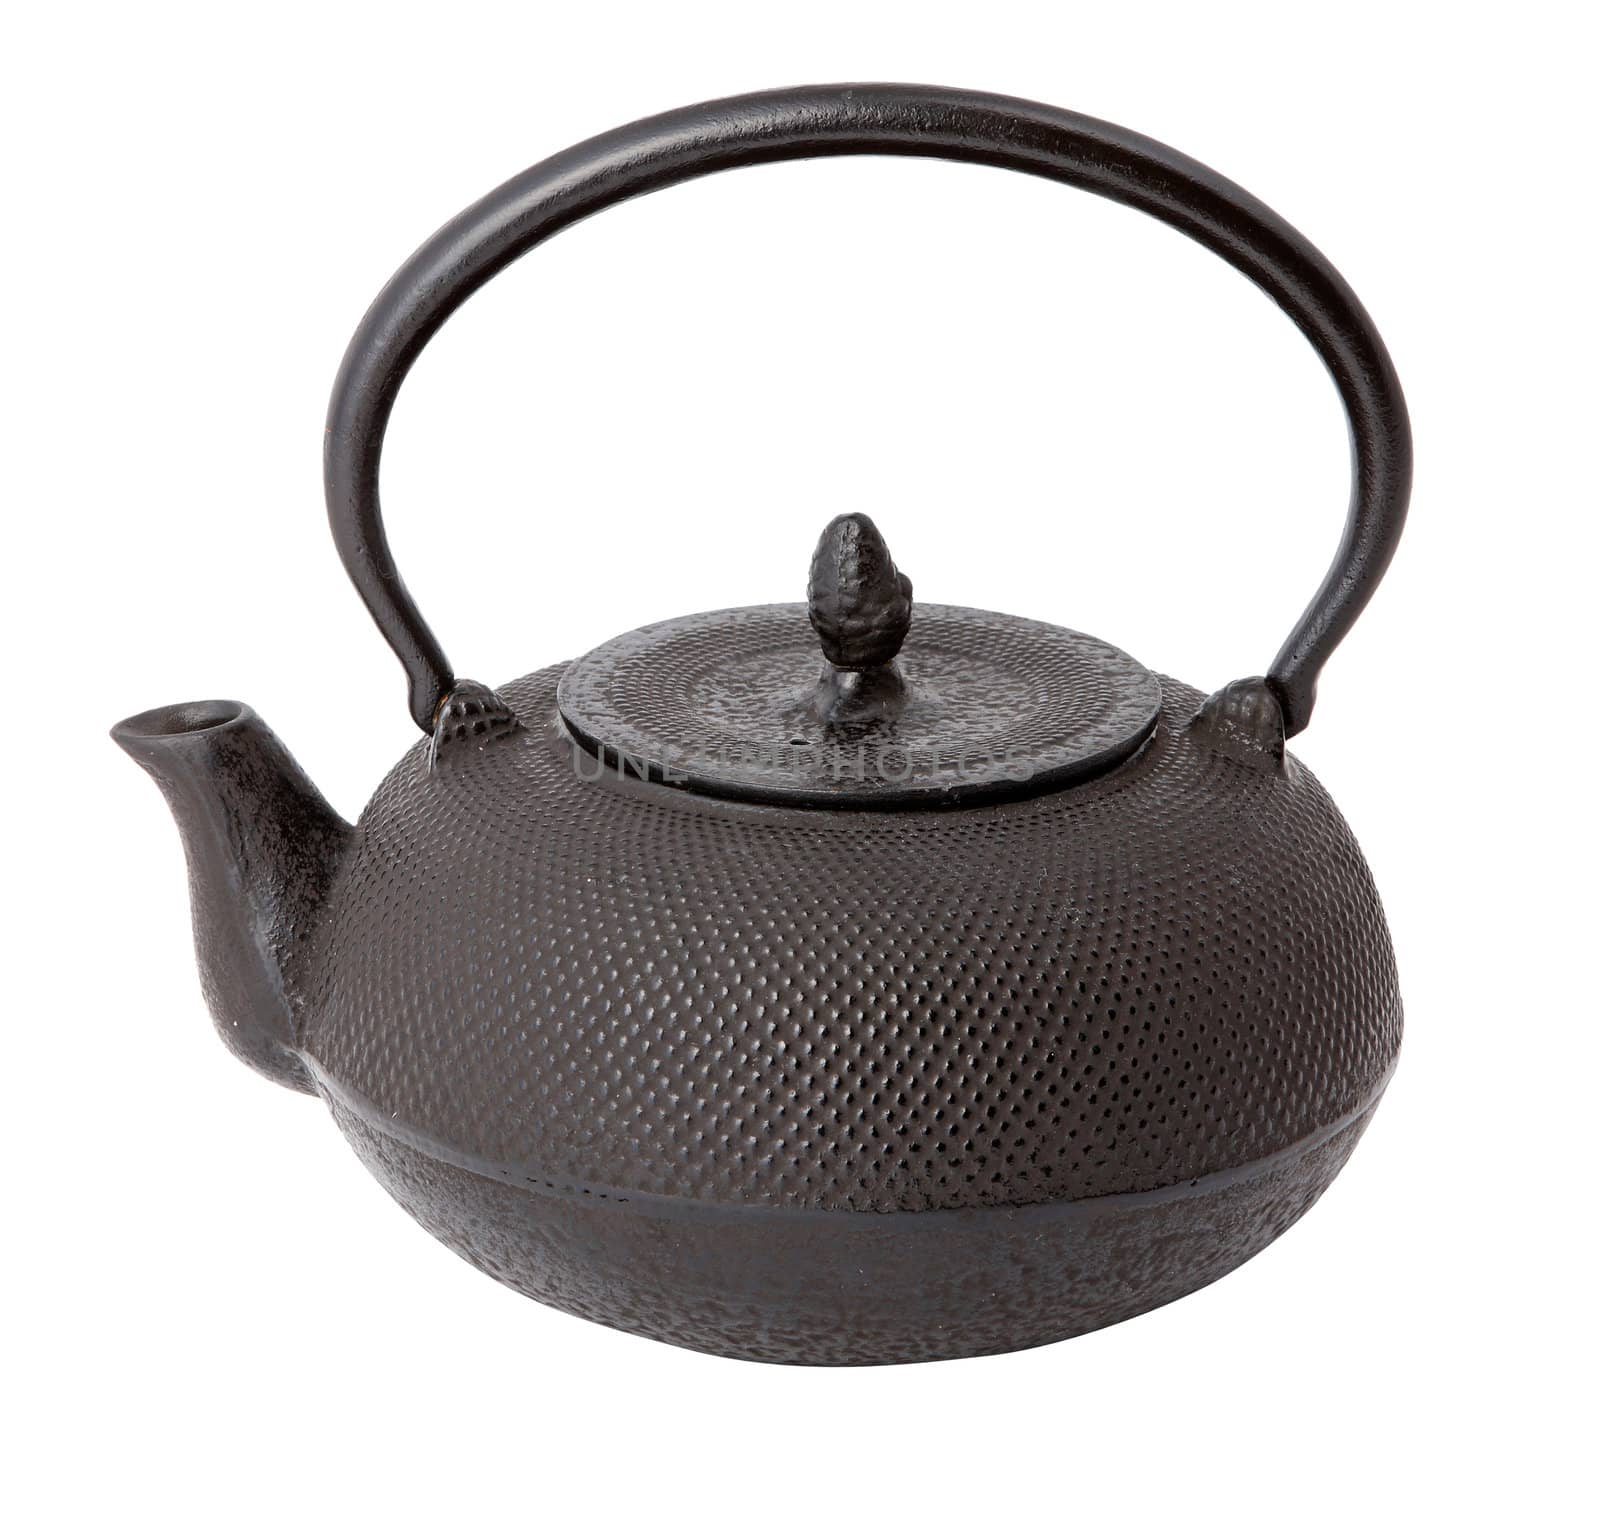 Teapot by fotoedgaras